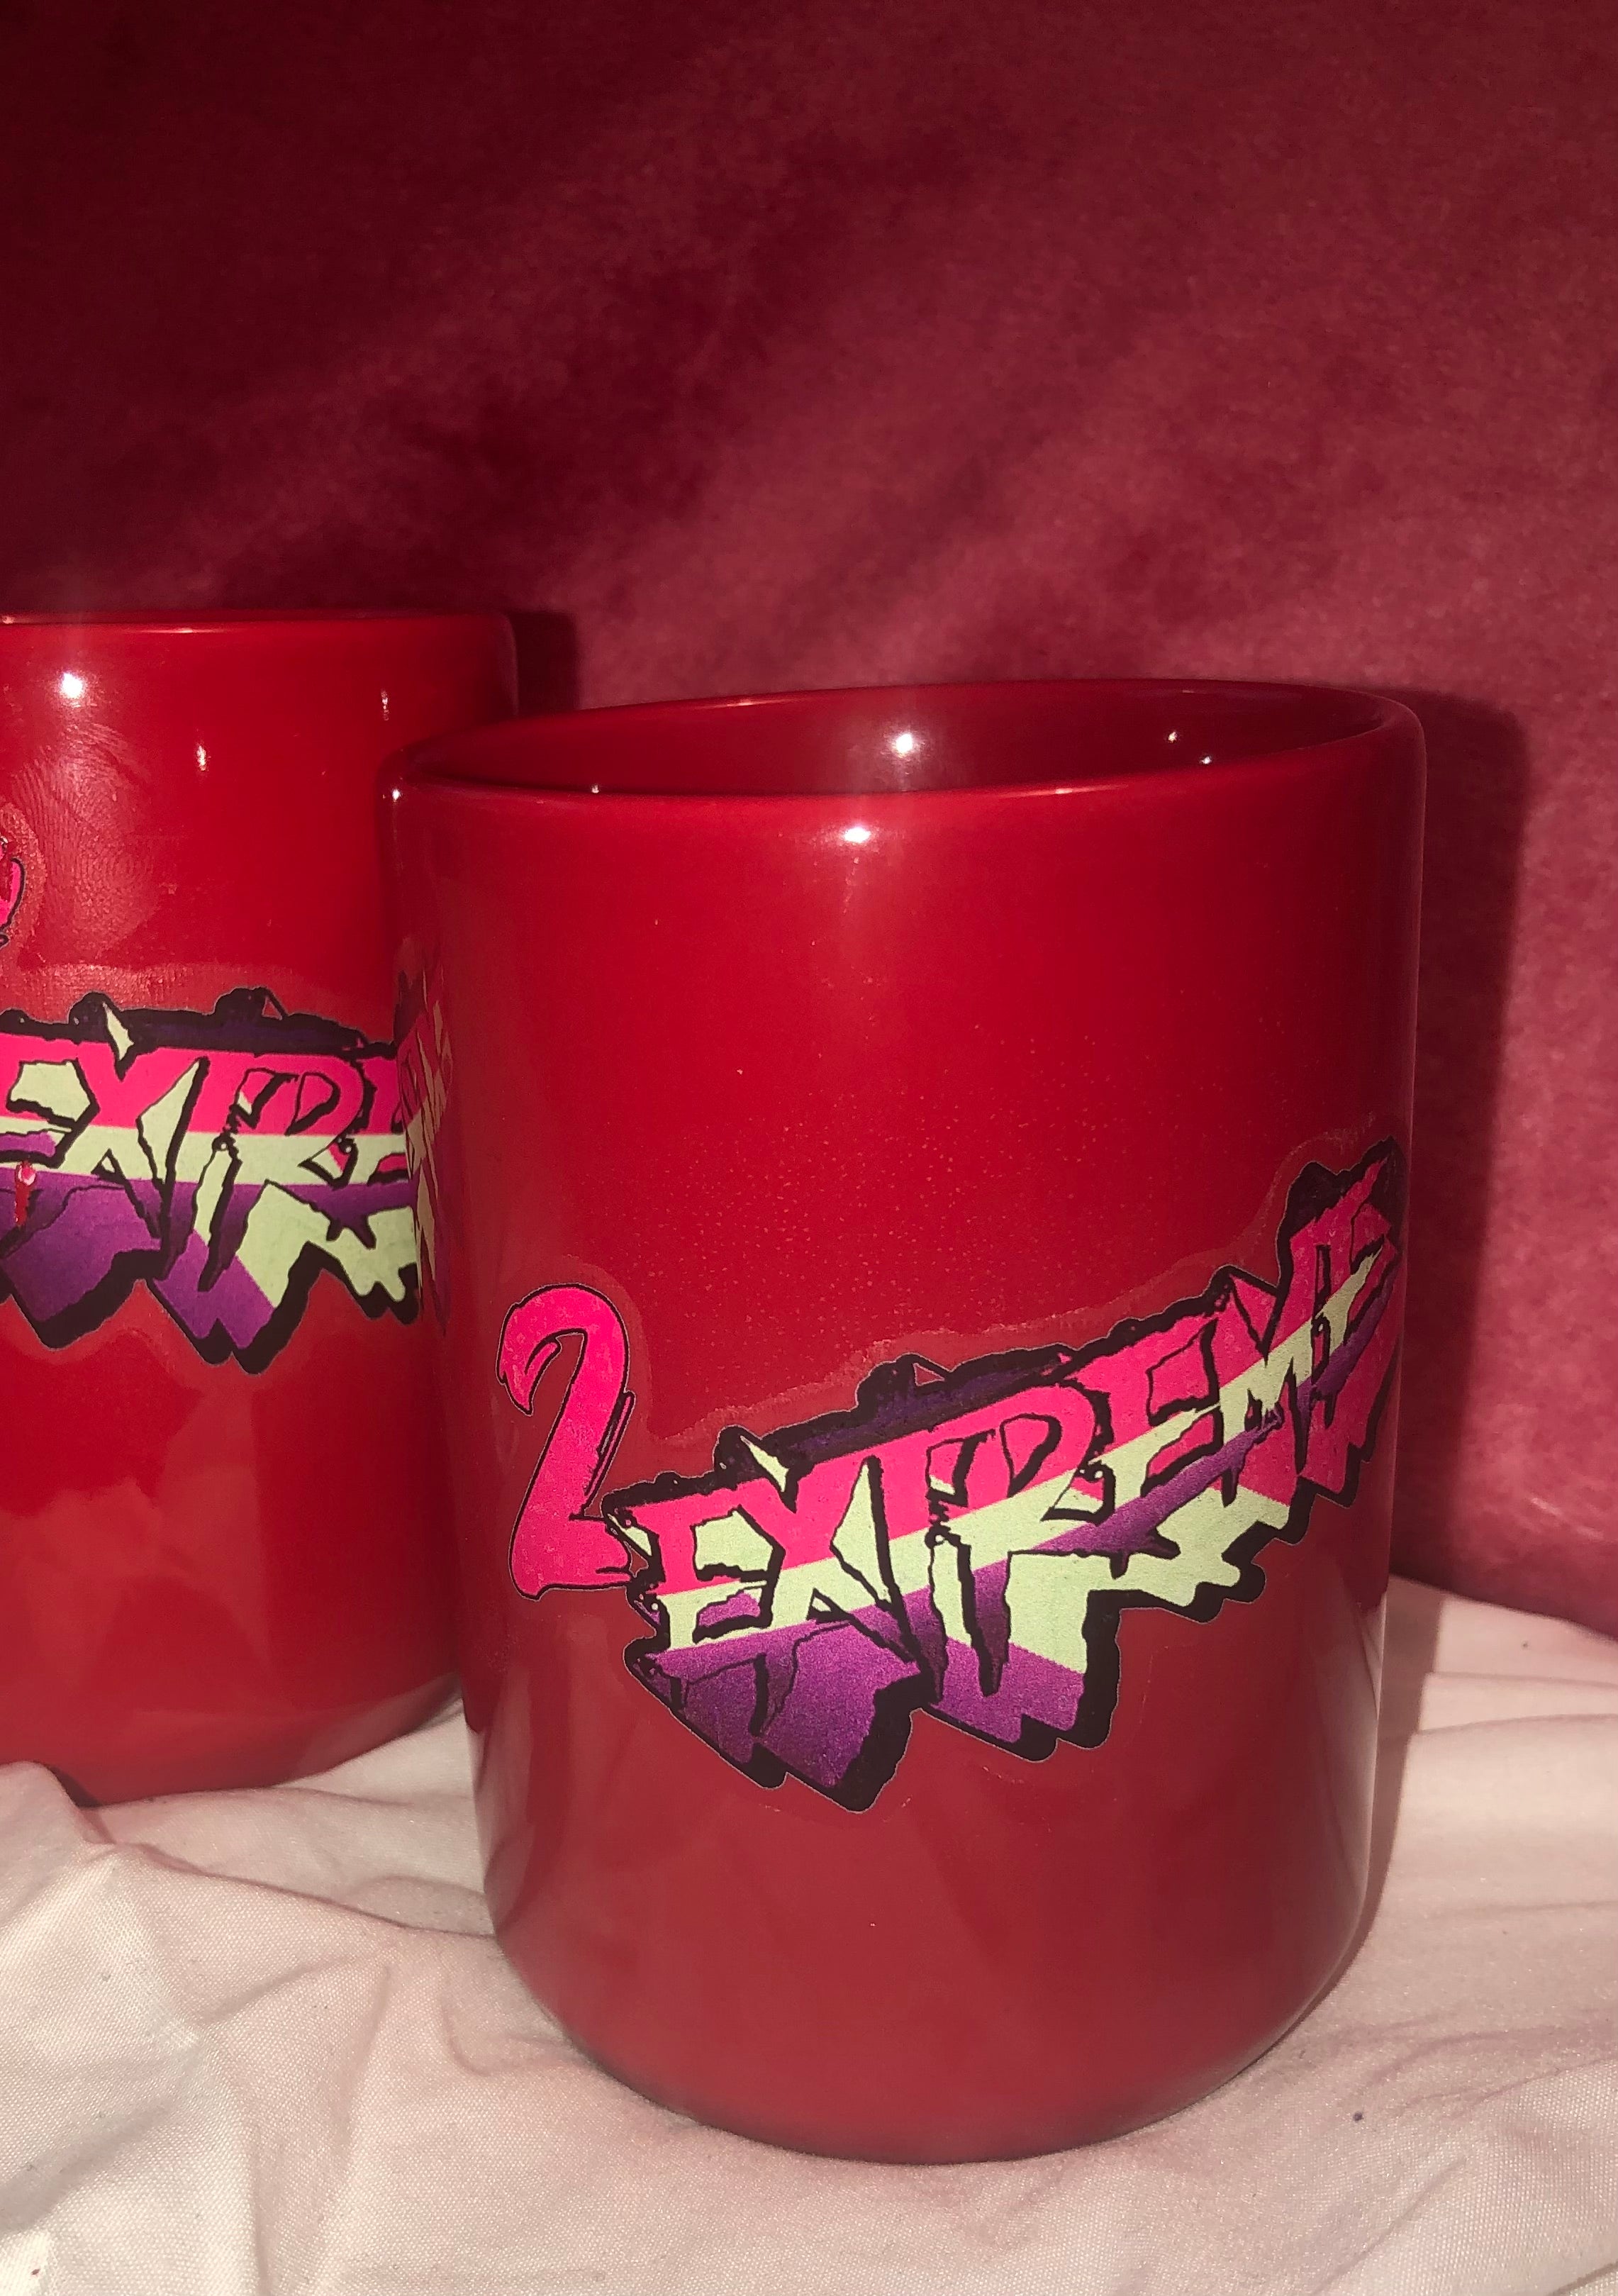 2Extreme- Red mugs